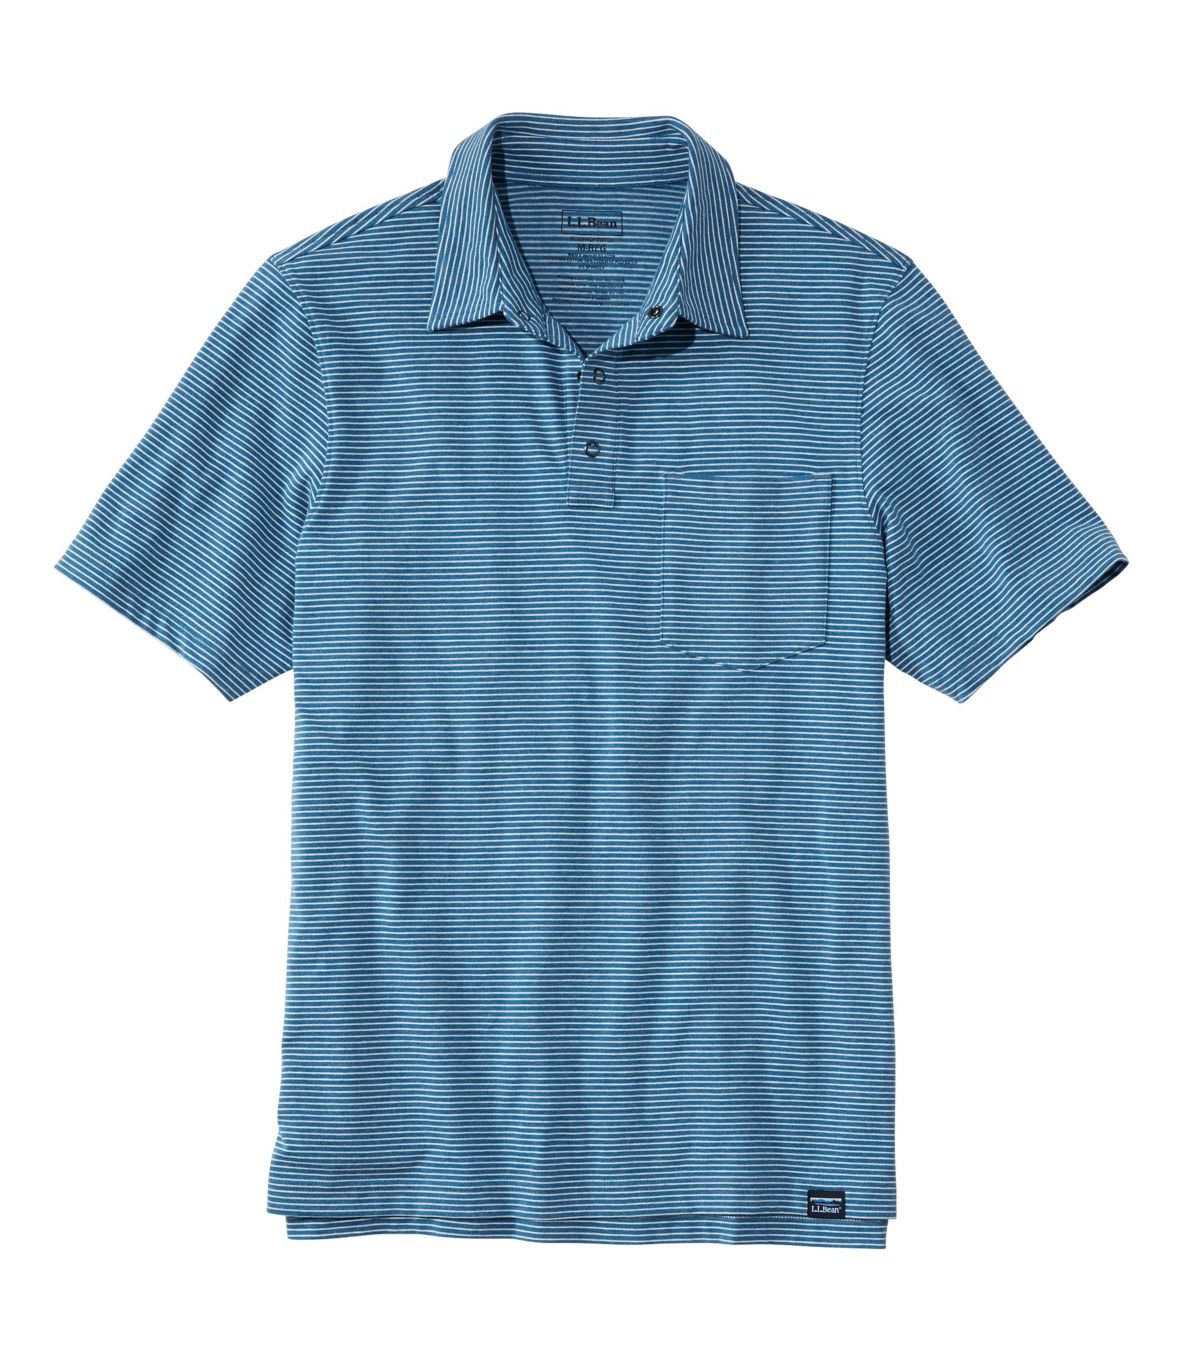 Men's Allagash Pima Cotton Blend Polo Shirt, Short-Sleeve, Stripe